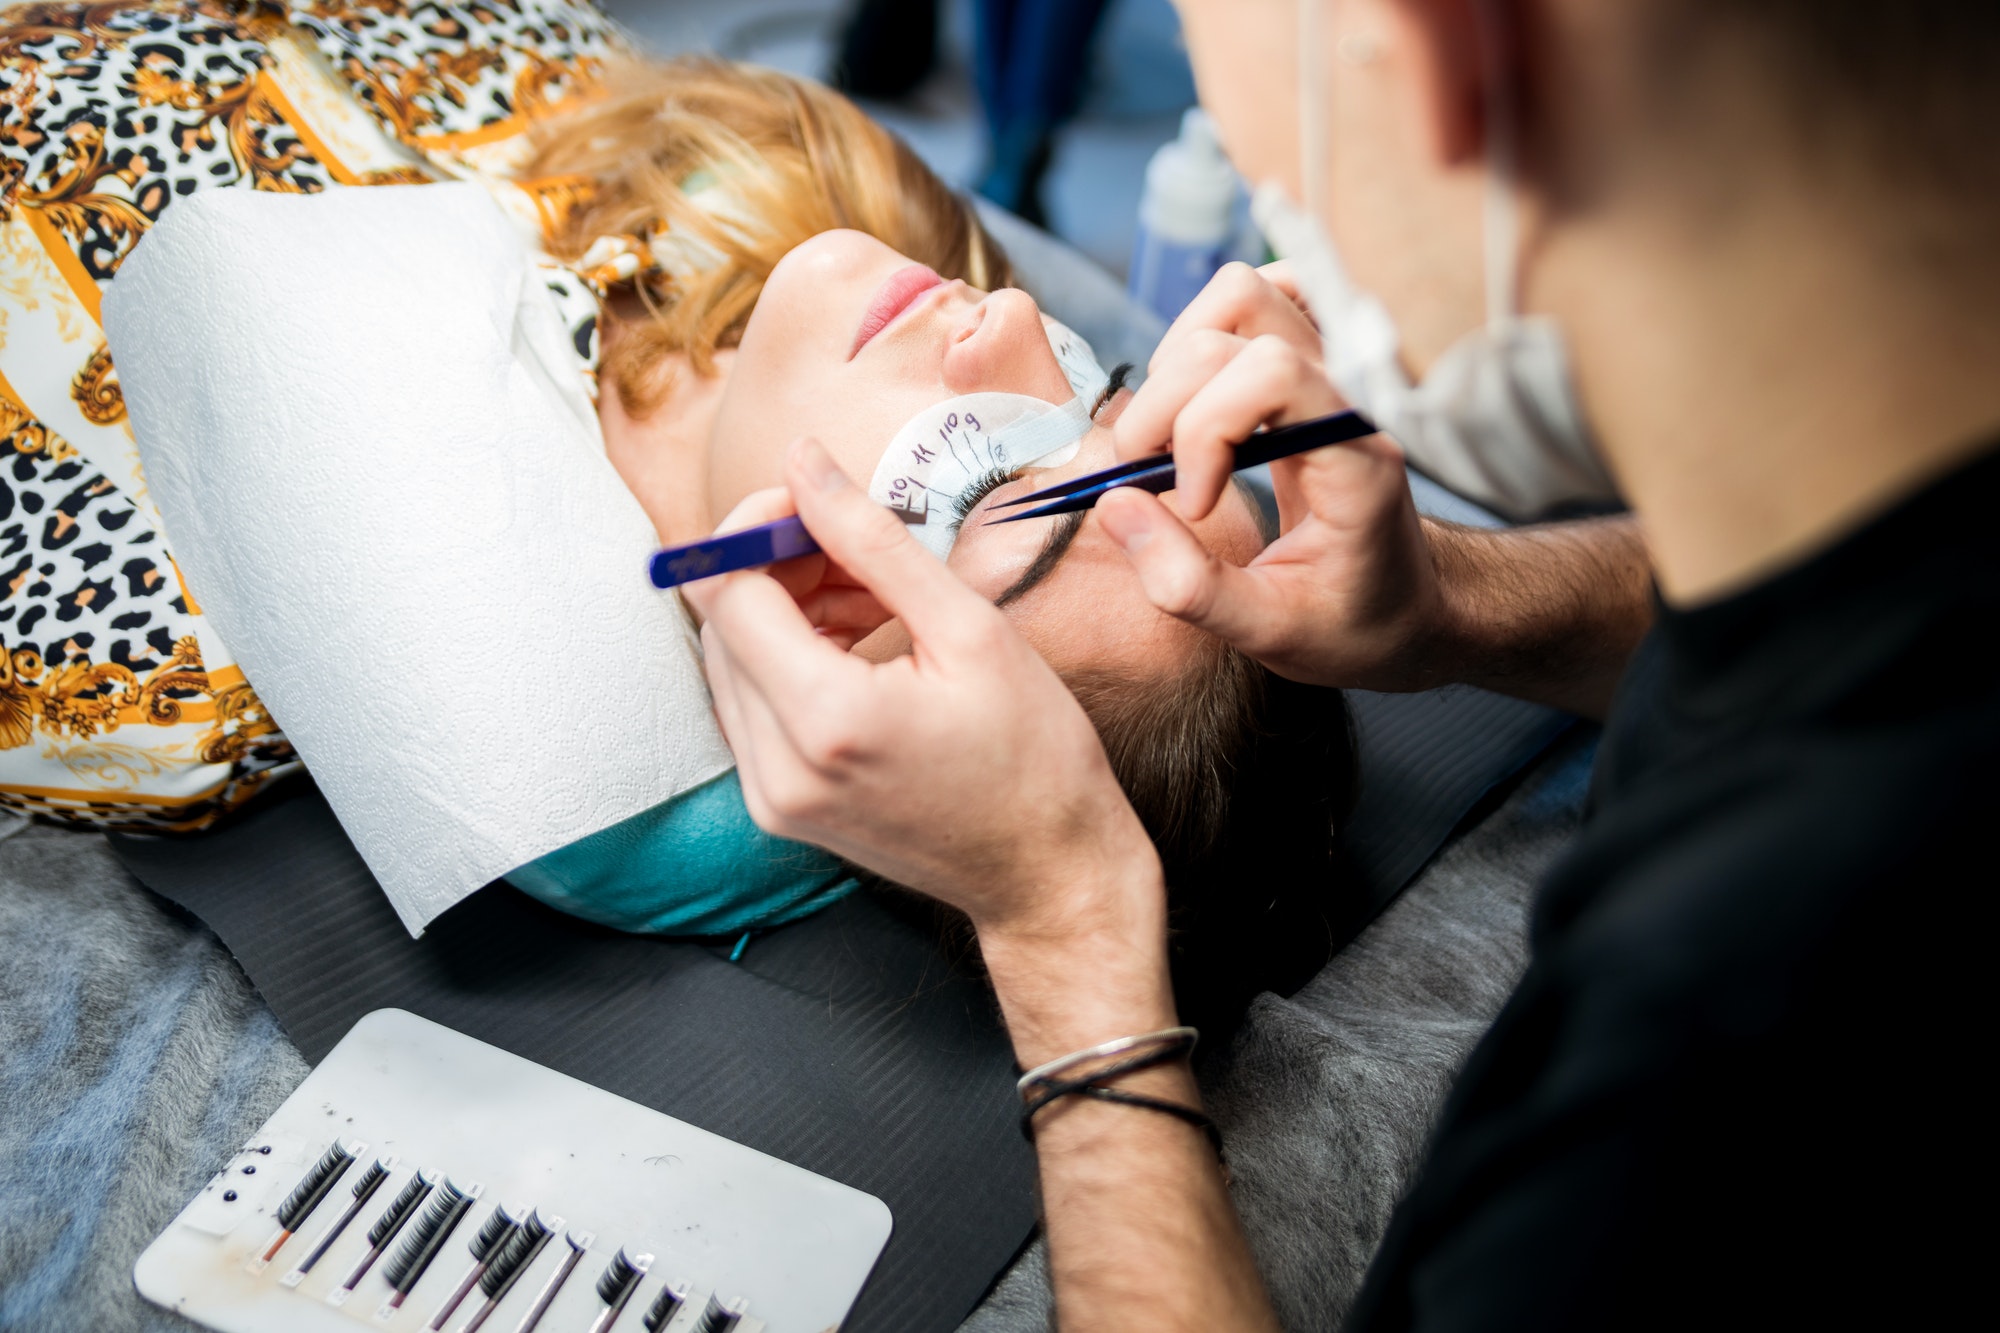 Applying eyelashes at beauty salon, Eyelash extension procedure